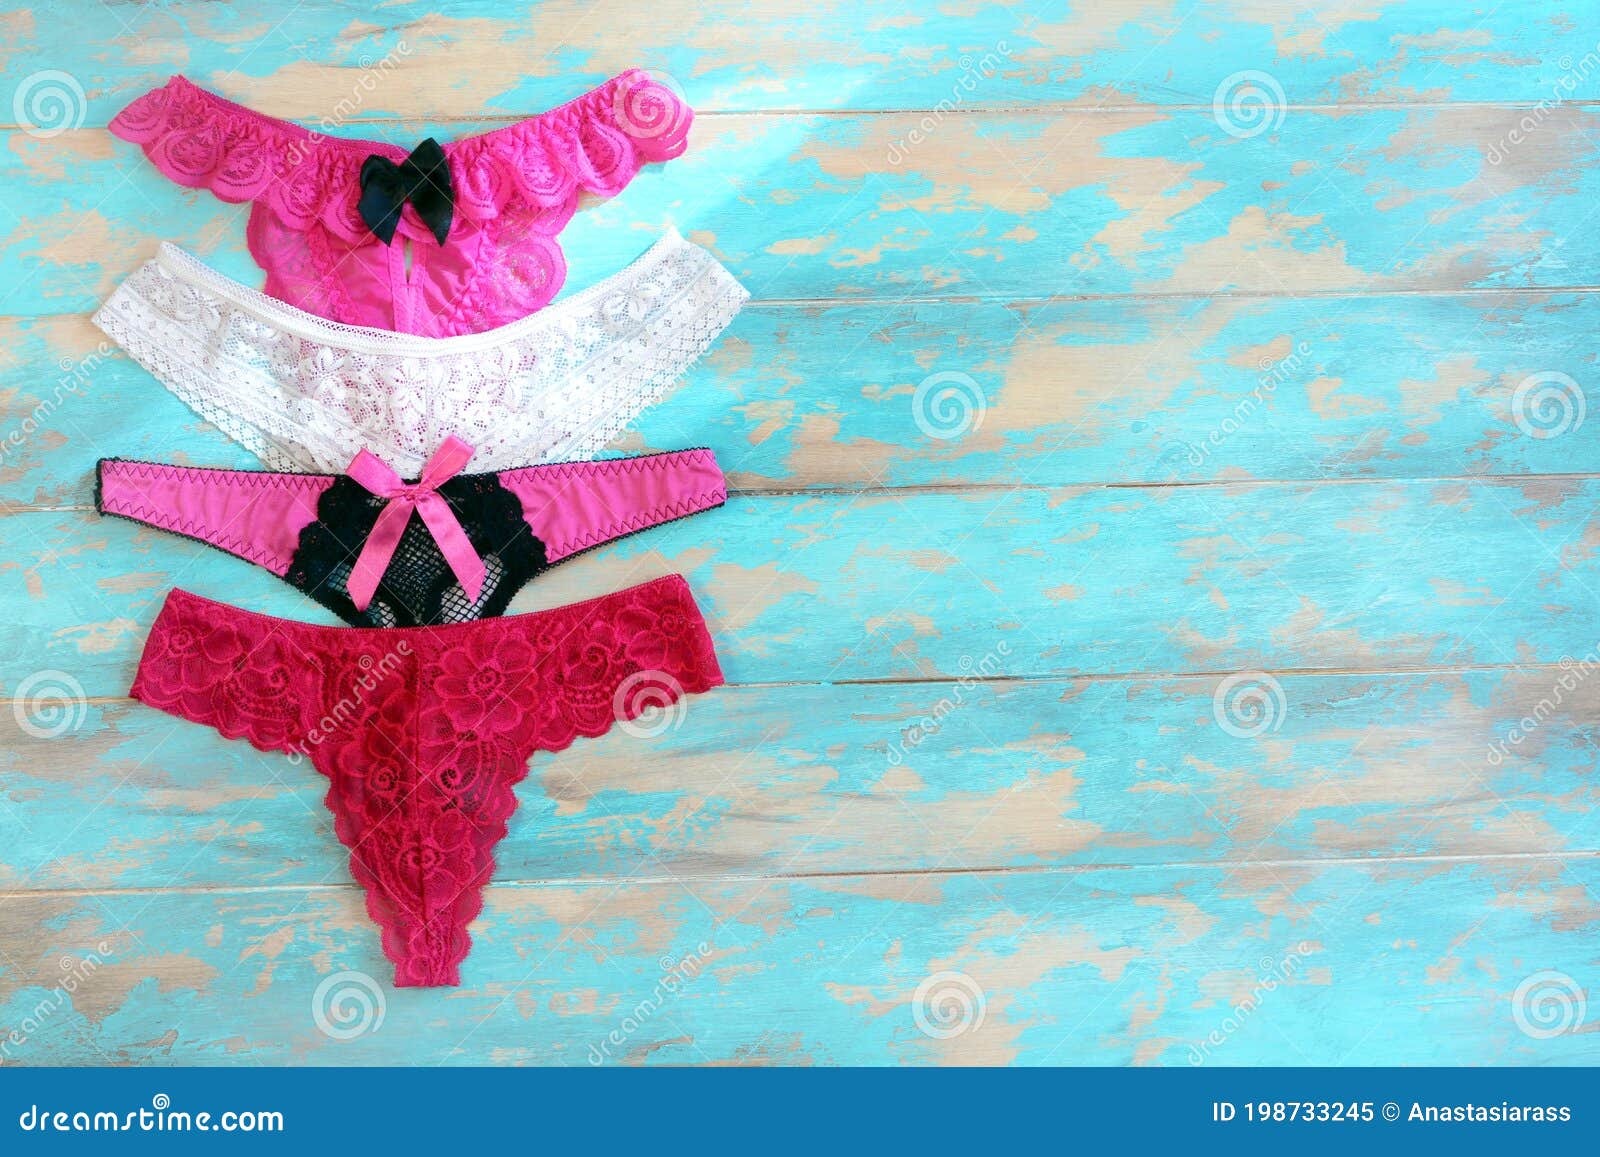 Girly Panties Stock Photos - Free & Royalty-Free Stock Photos from